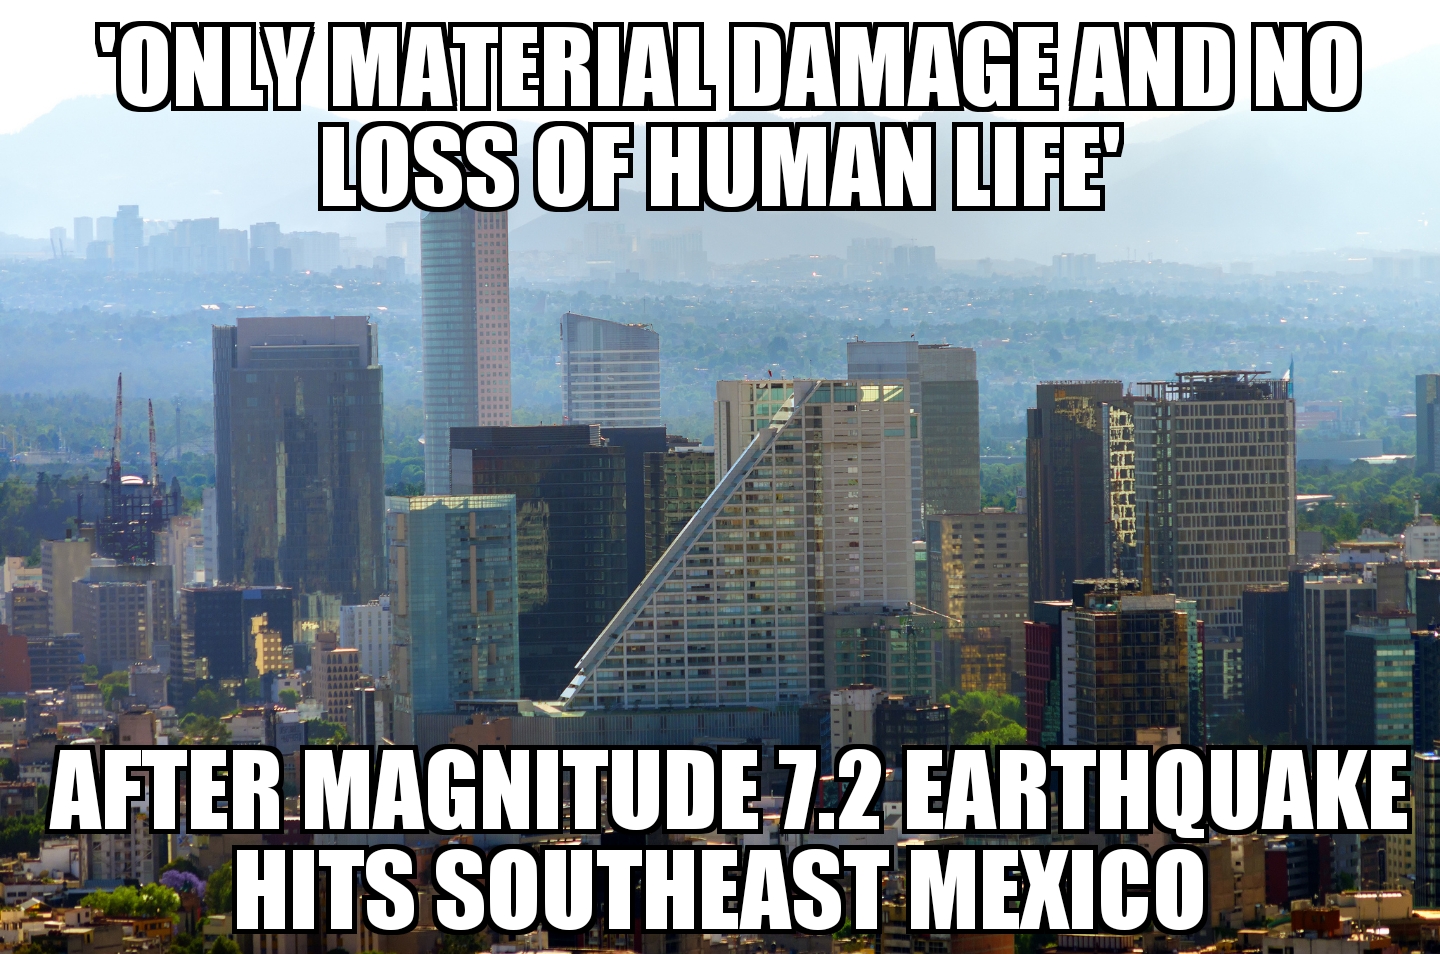 Earthquake hits southeast Mexico